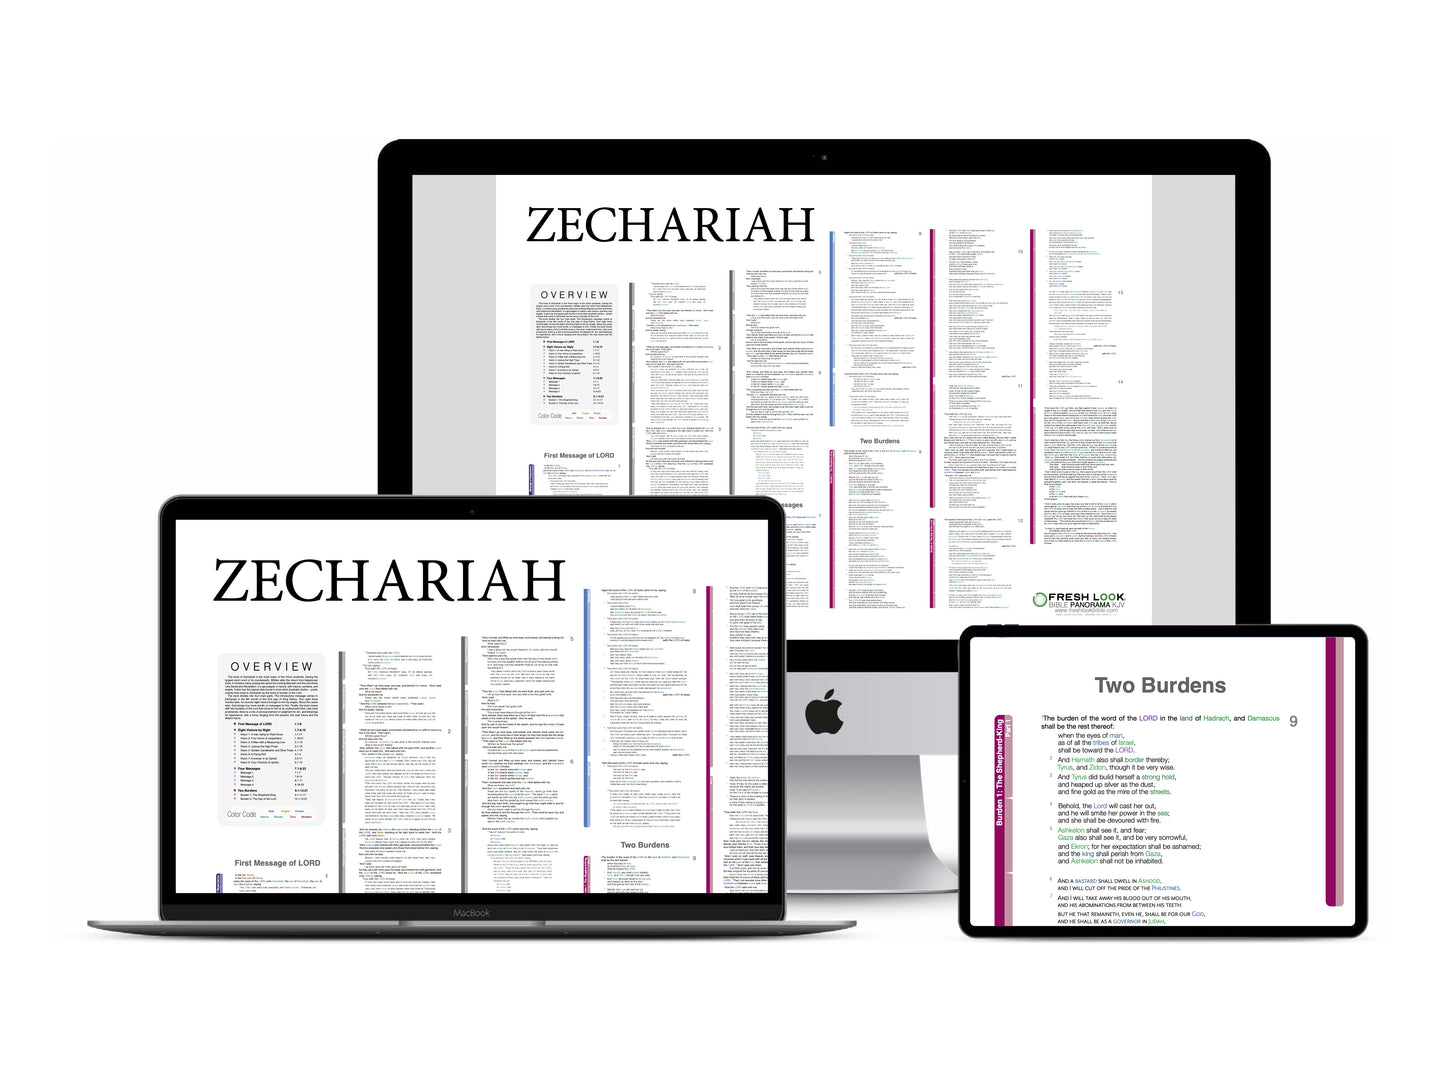 Zechariah Panorama PDF